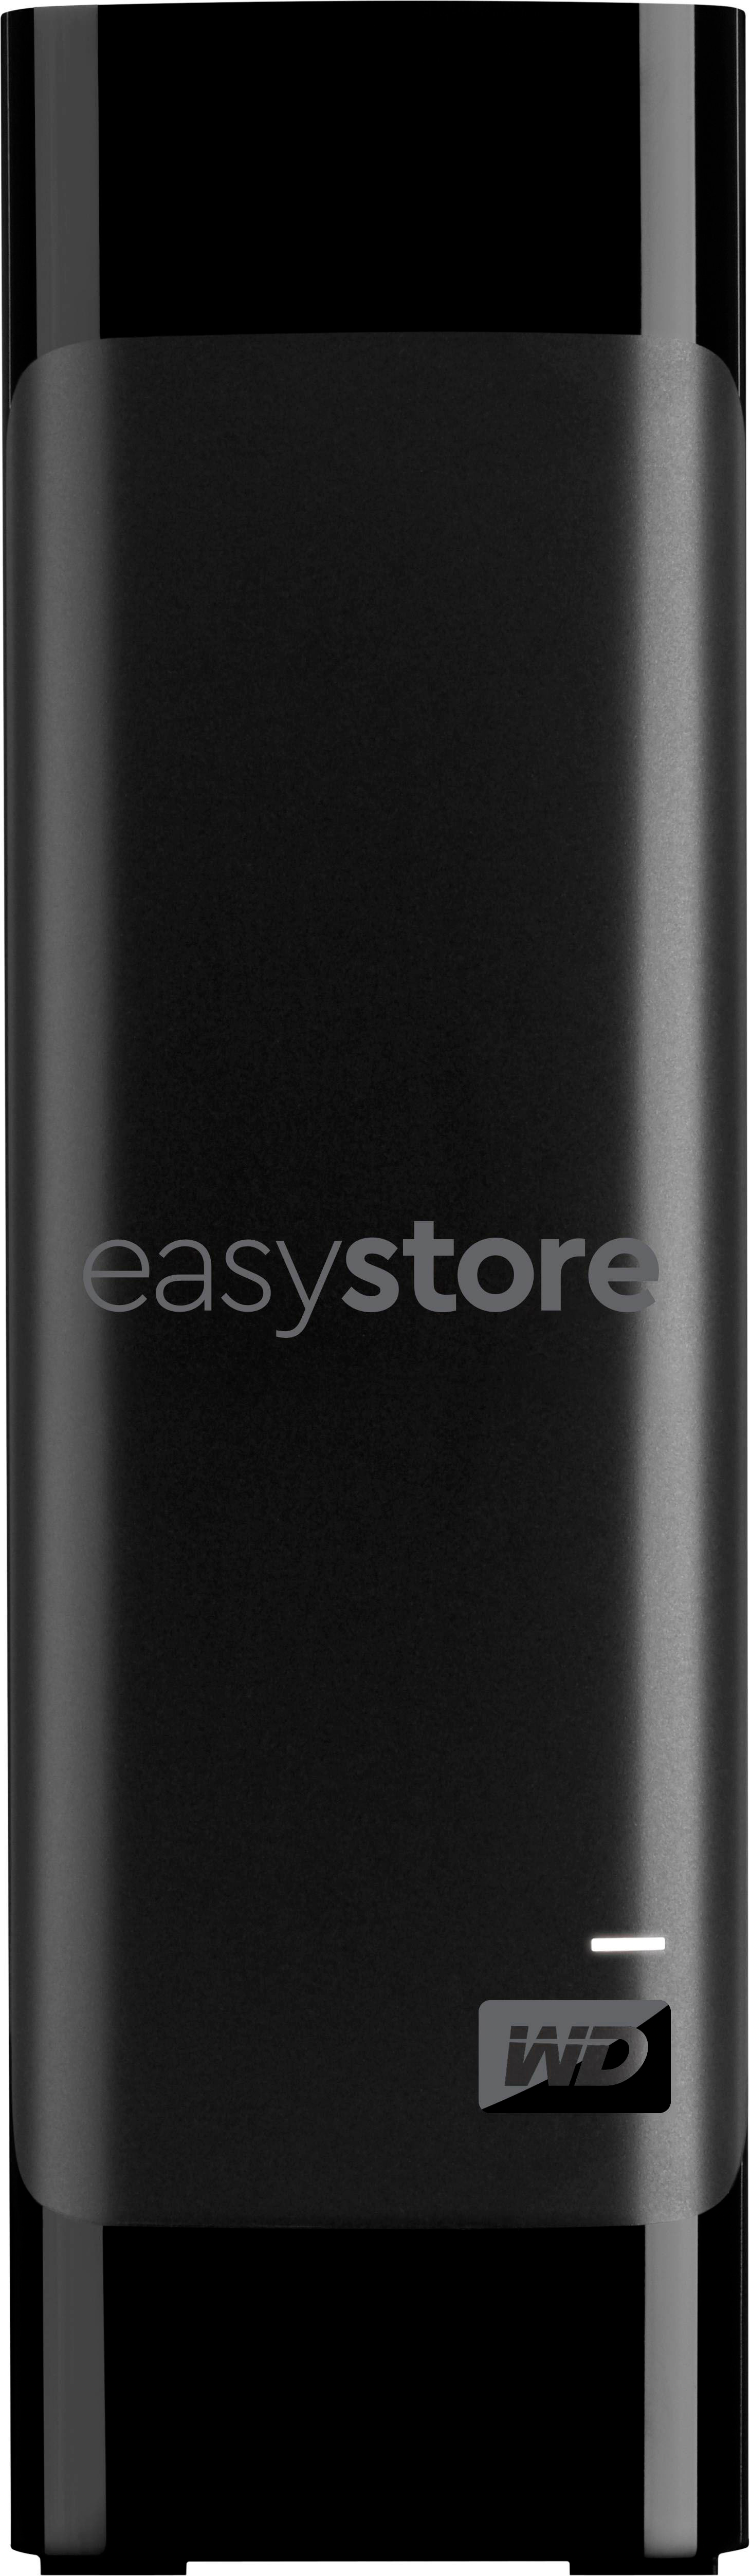 easystore 18TB External USB 3.0 Hard Drive Black - Best